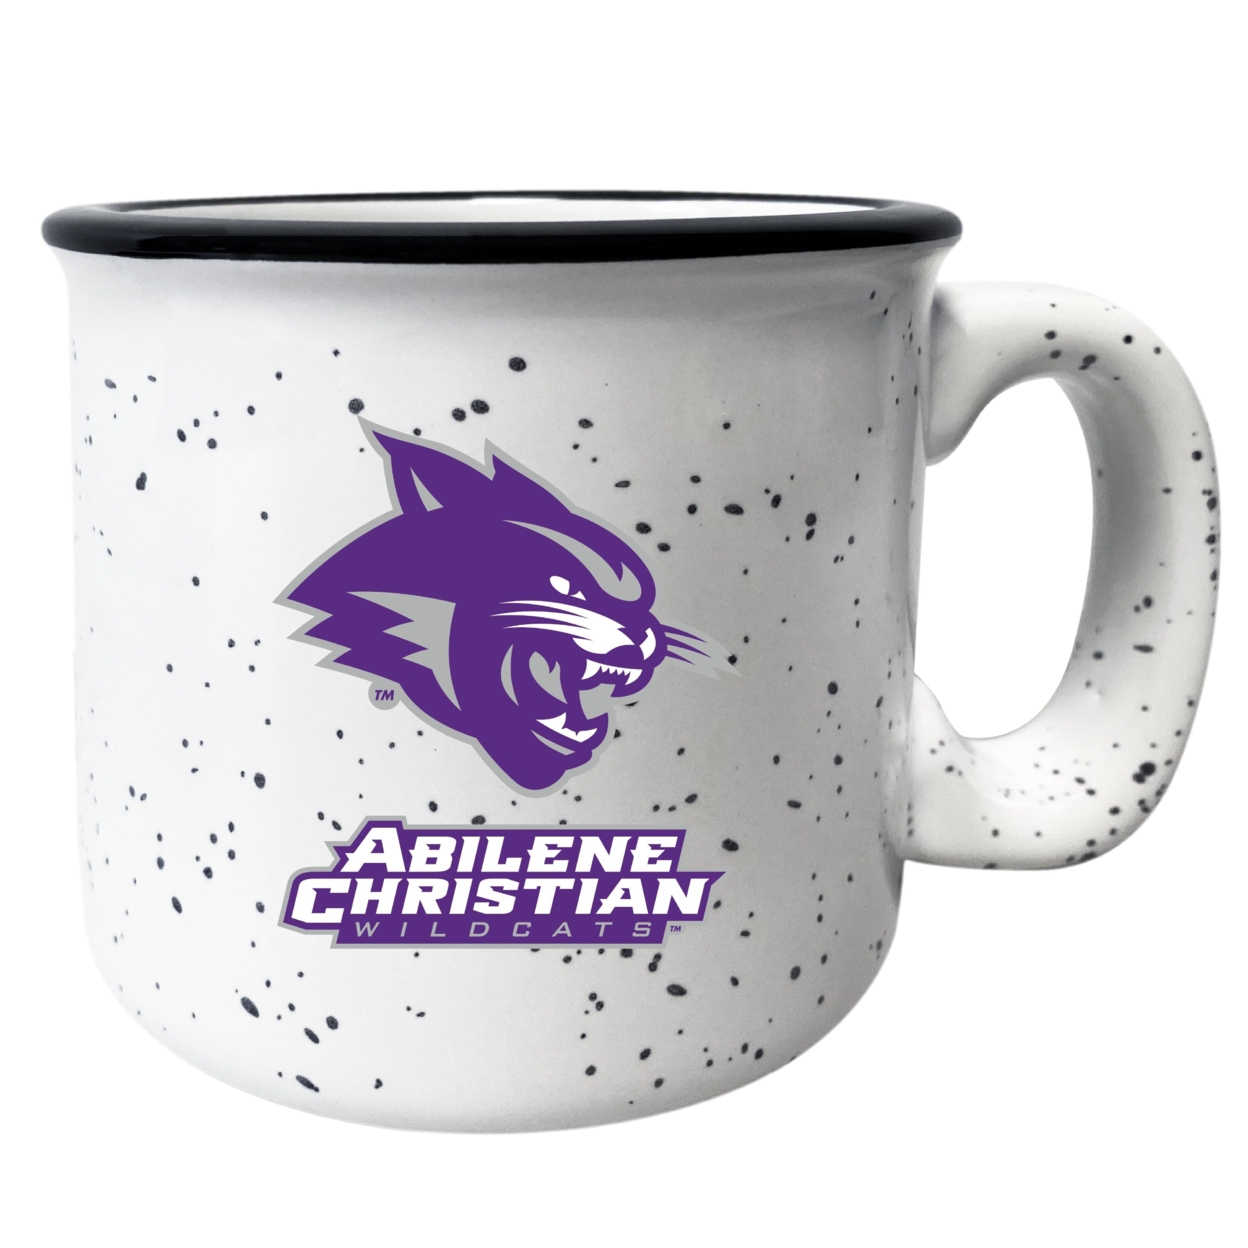 Abilene Christian University Speckled Ceramic Camper Coffee Mug - Choose Your Color - White